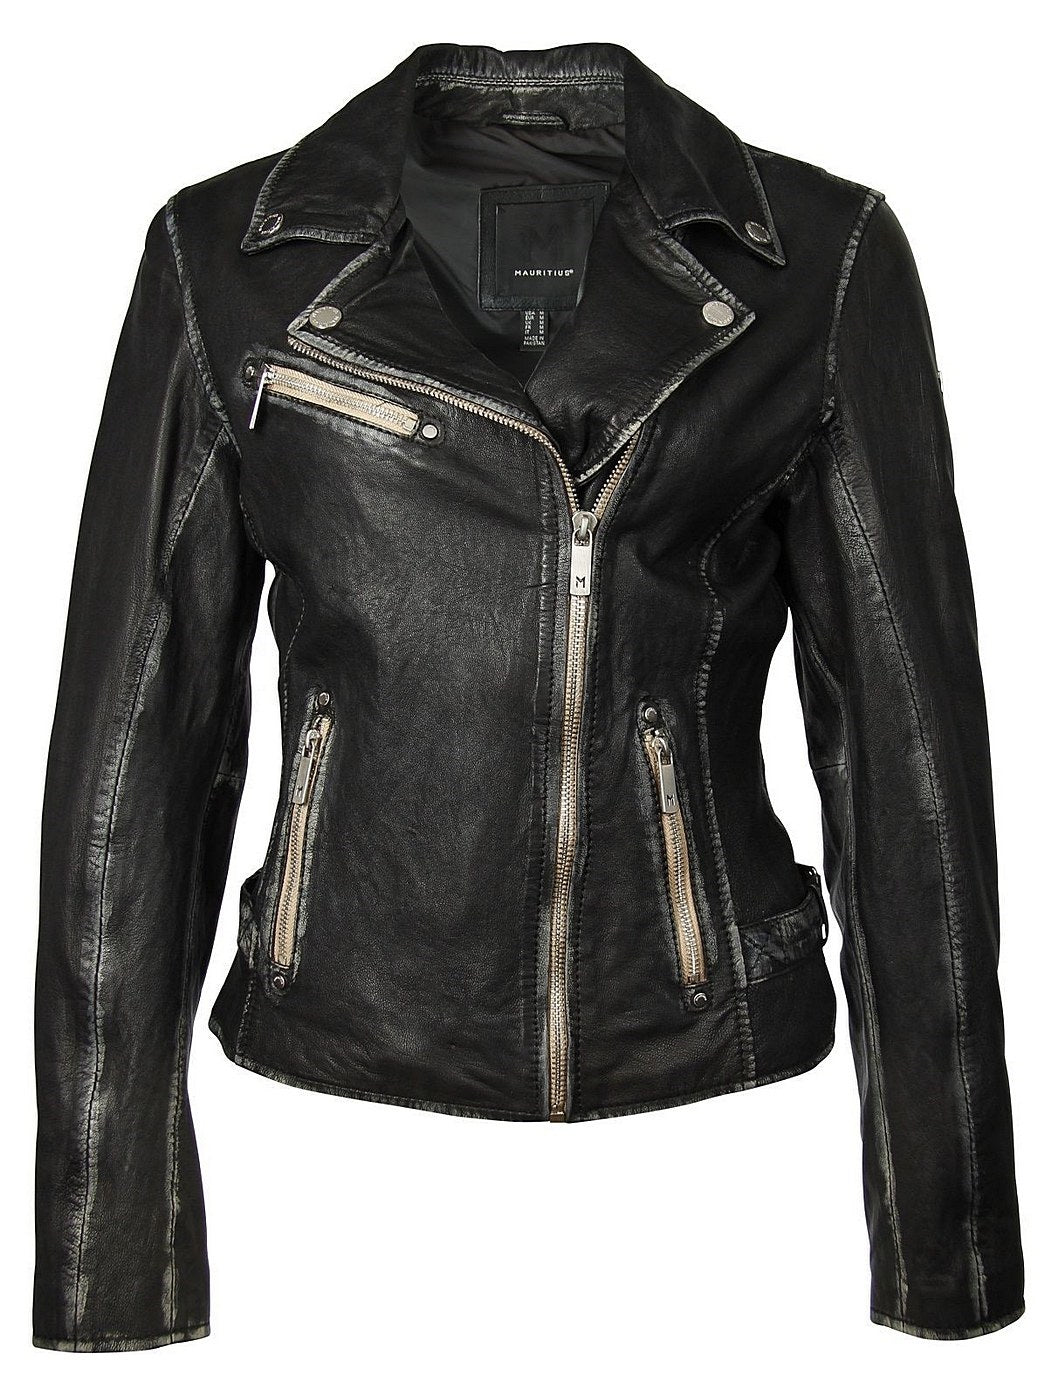 Mauritius Women's Sofia Rf Leather Jacket, Black